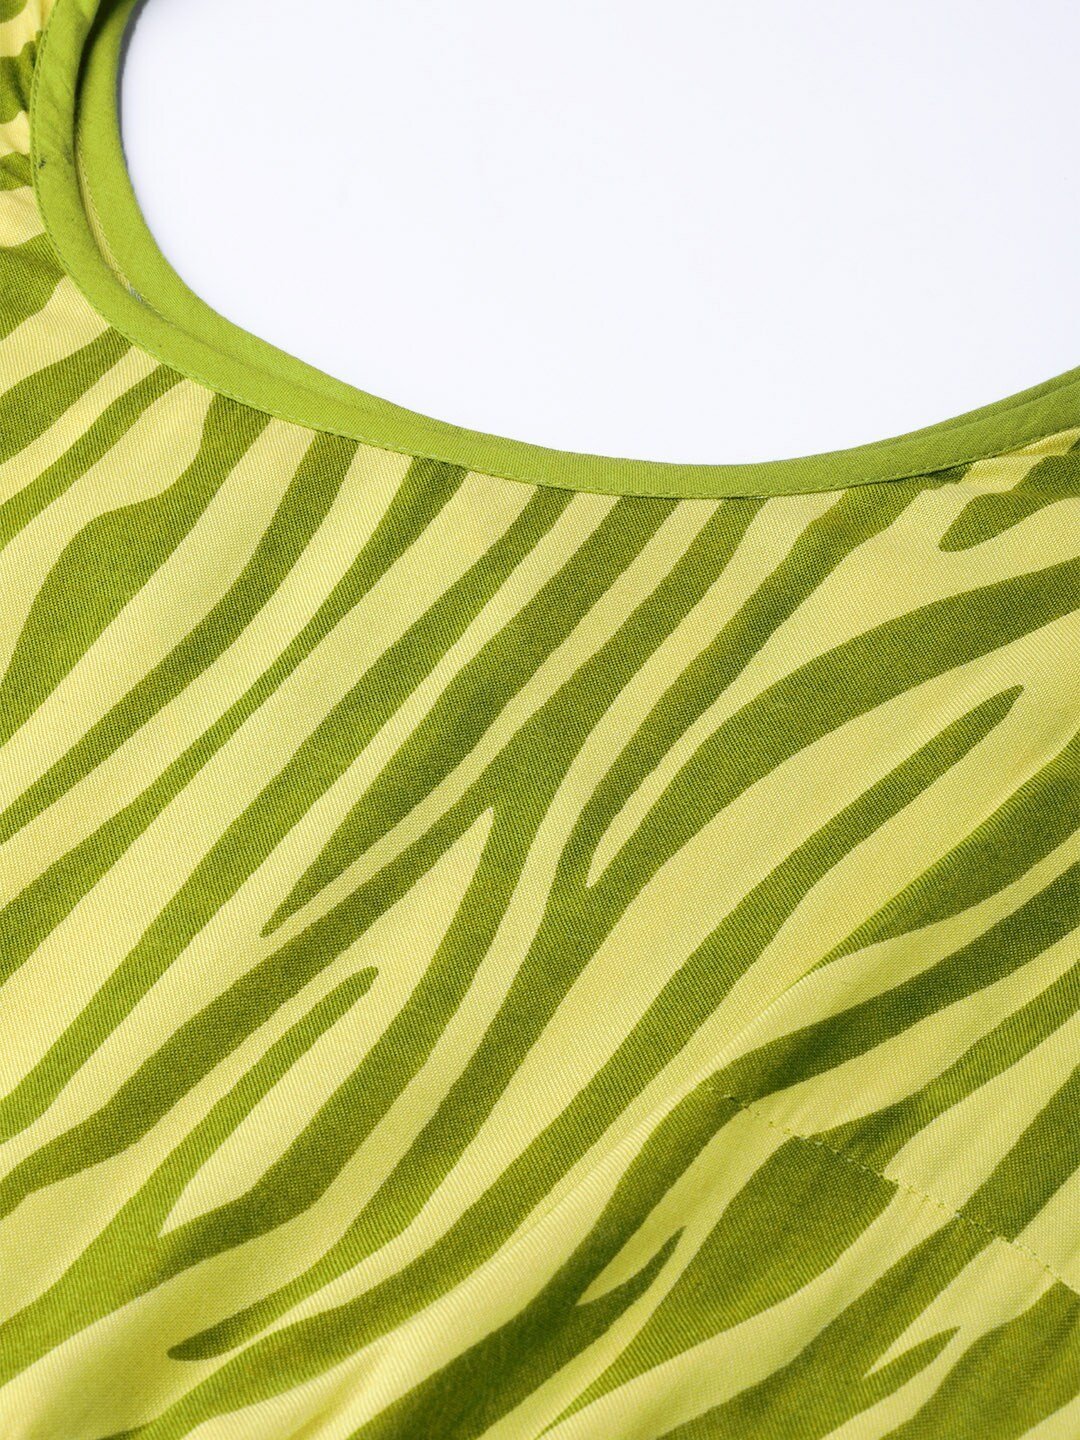 Women's  Yellow & Green Zebra Print Anarkali Kurta - AKS